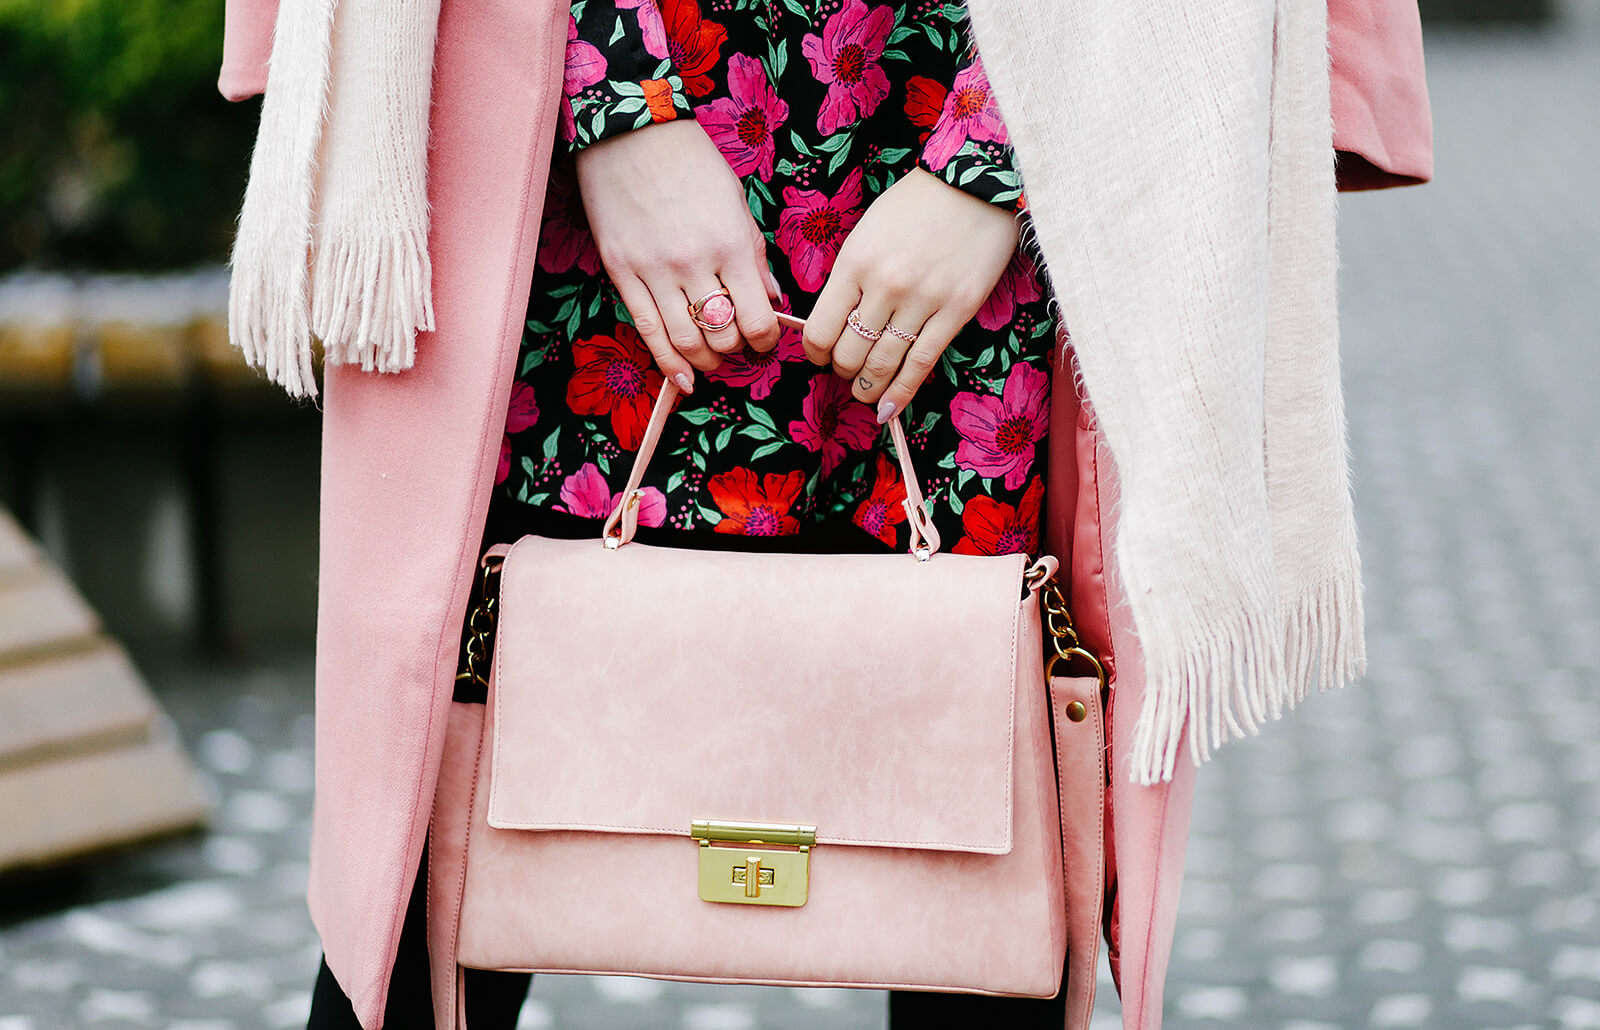 A designer handbag